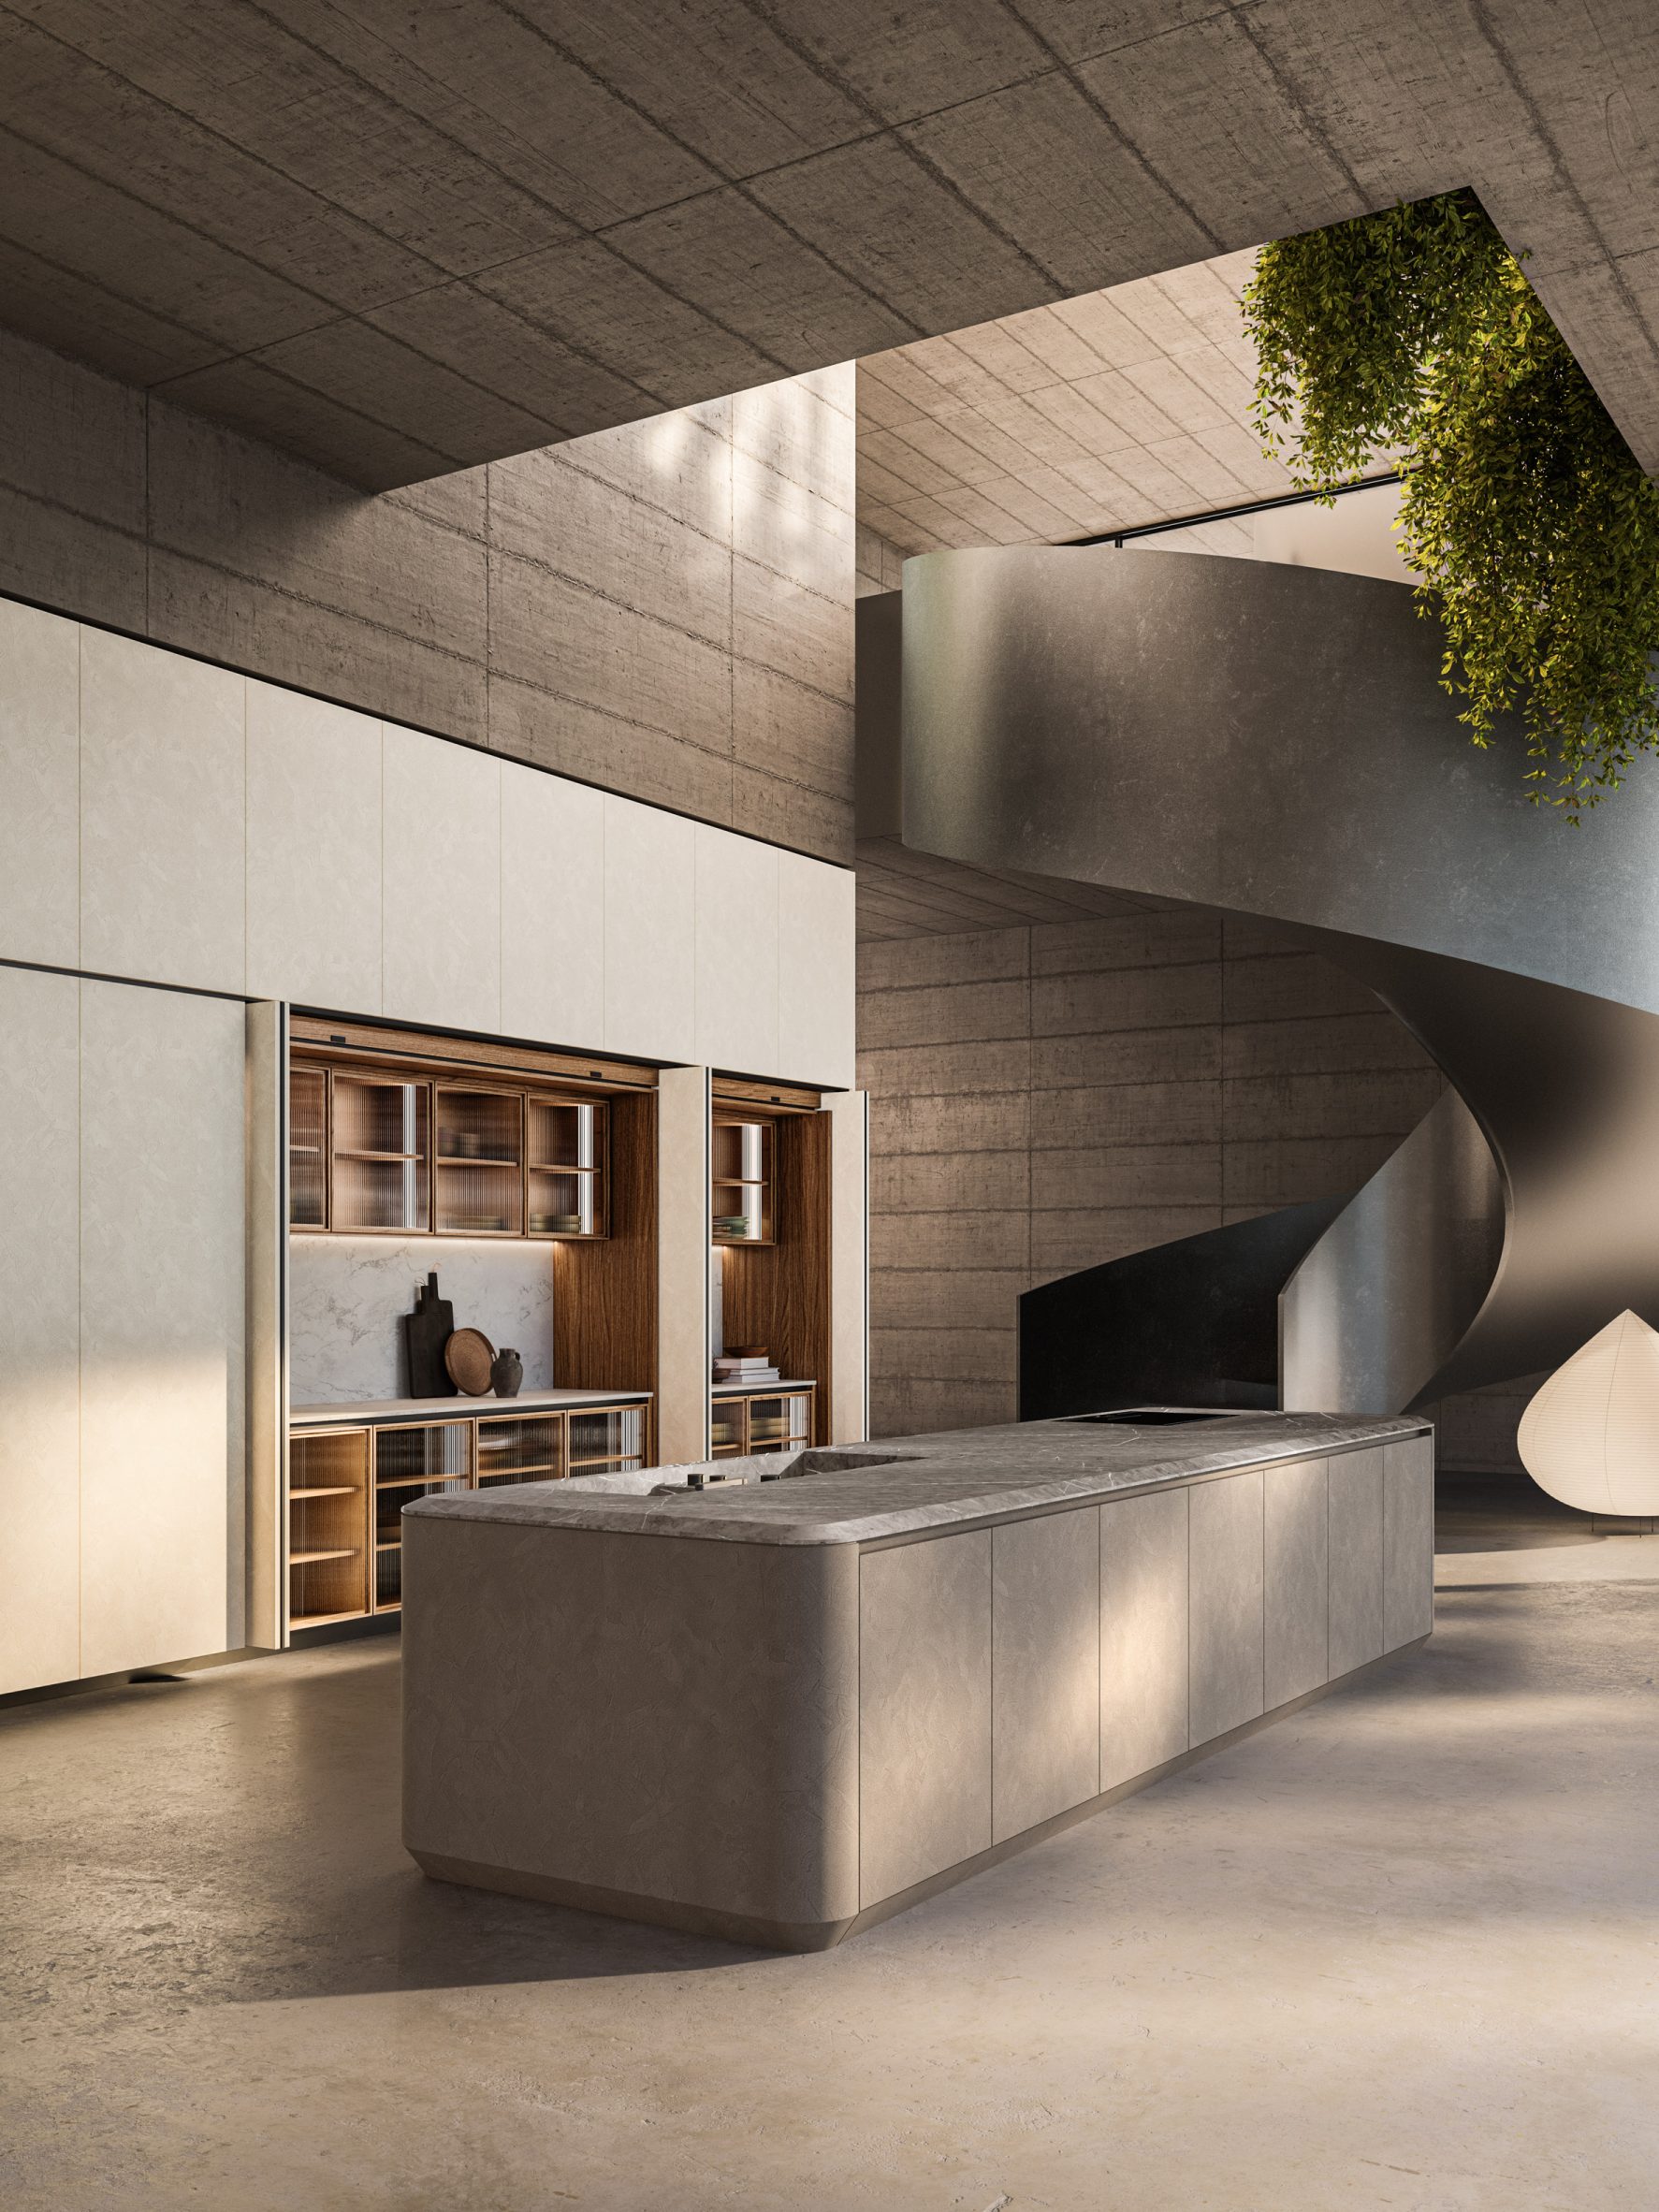 Interior of kitchen with Cove island by Zaha Hadid Design